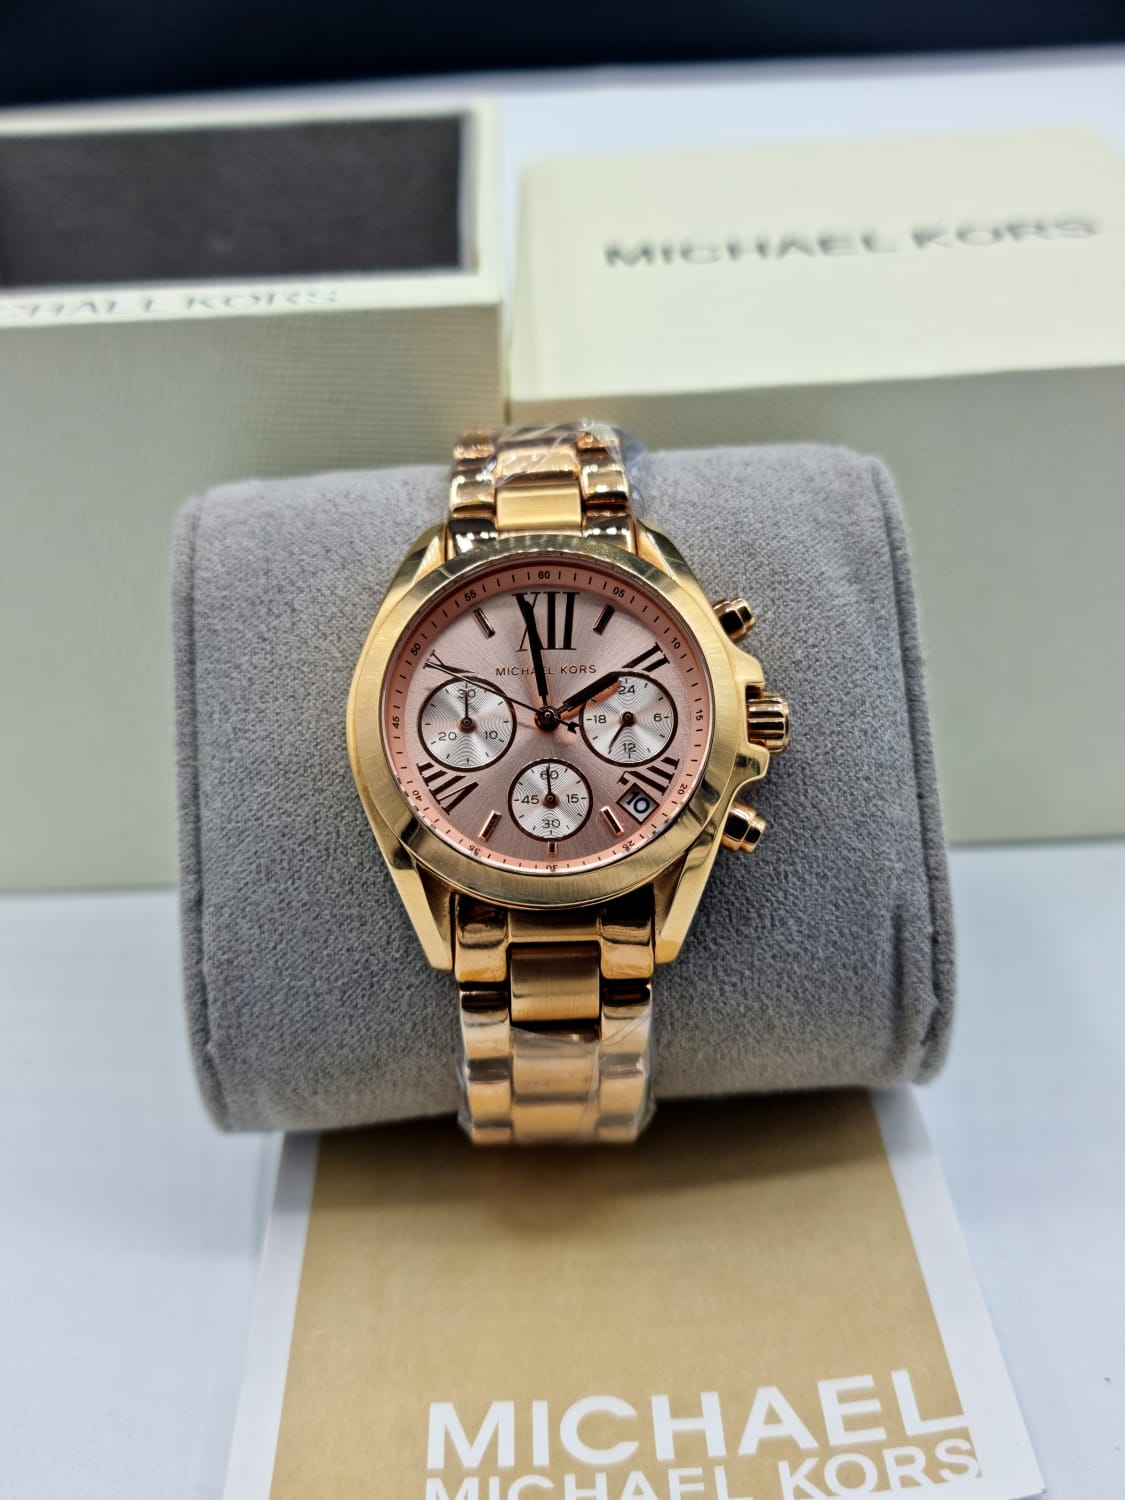 Michael Kors Bradshaw Chronograph Gold Dial Gold Steel Strap Watch for Women - MK5799